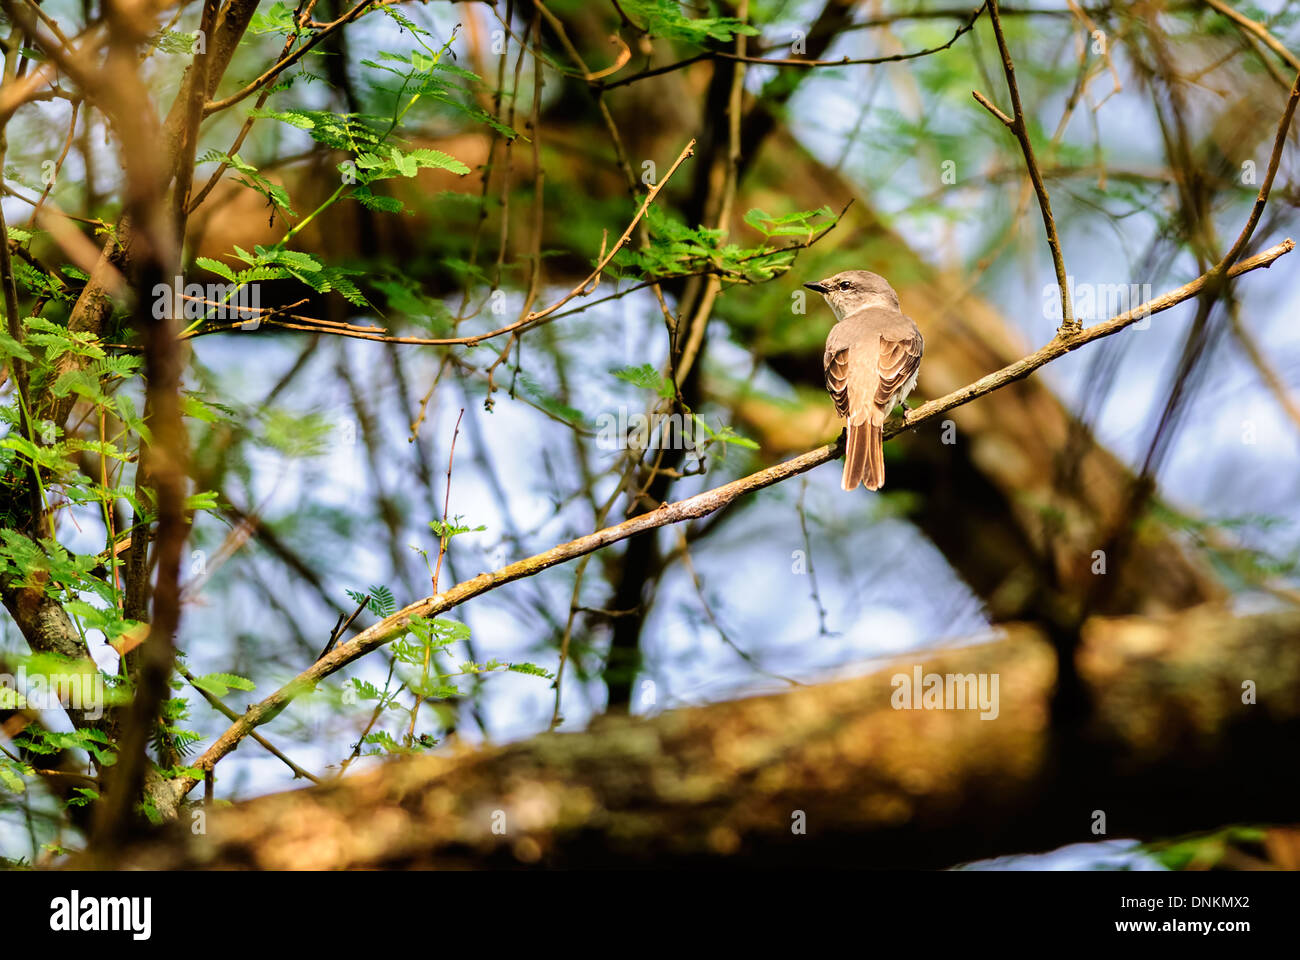 Small bird, vertebrate animal Swinhoe's Minivet Pericrocotus cantonensis winter migrant perched on a tree branch, copy space Stock Photo